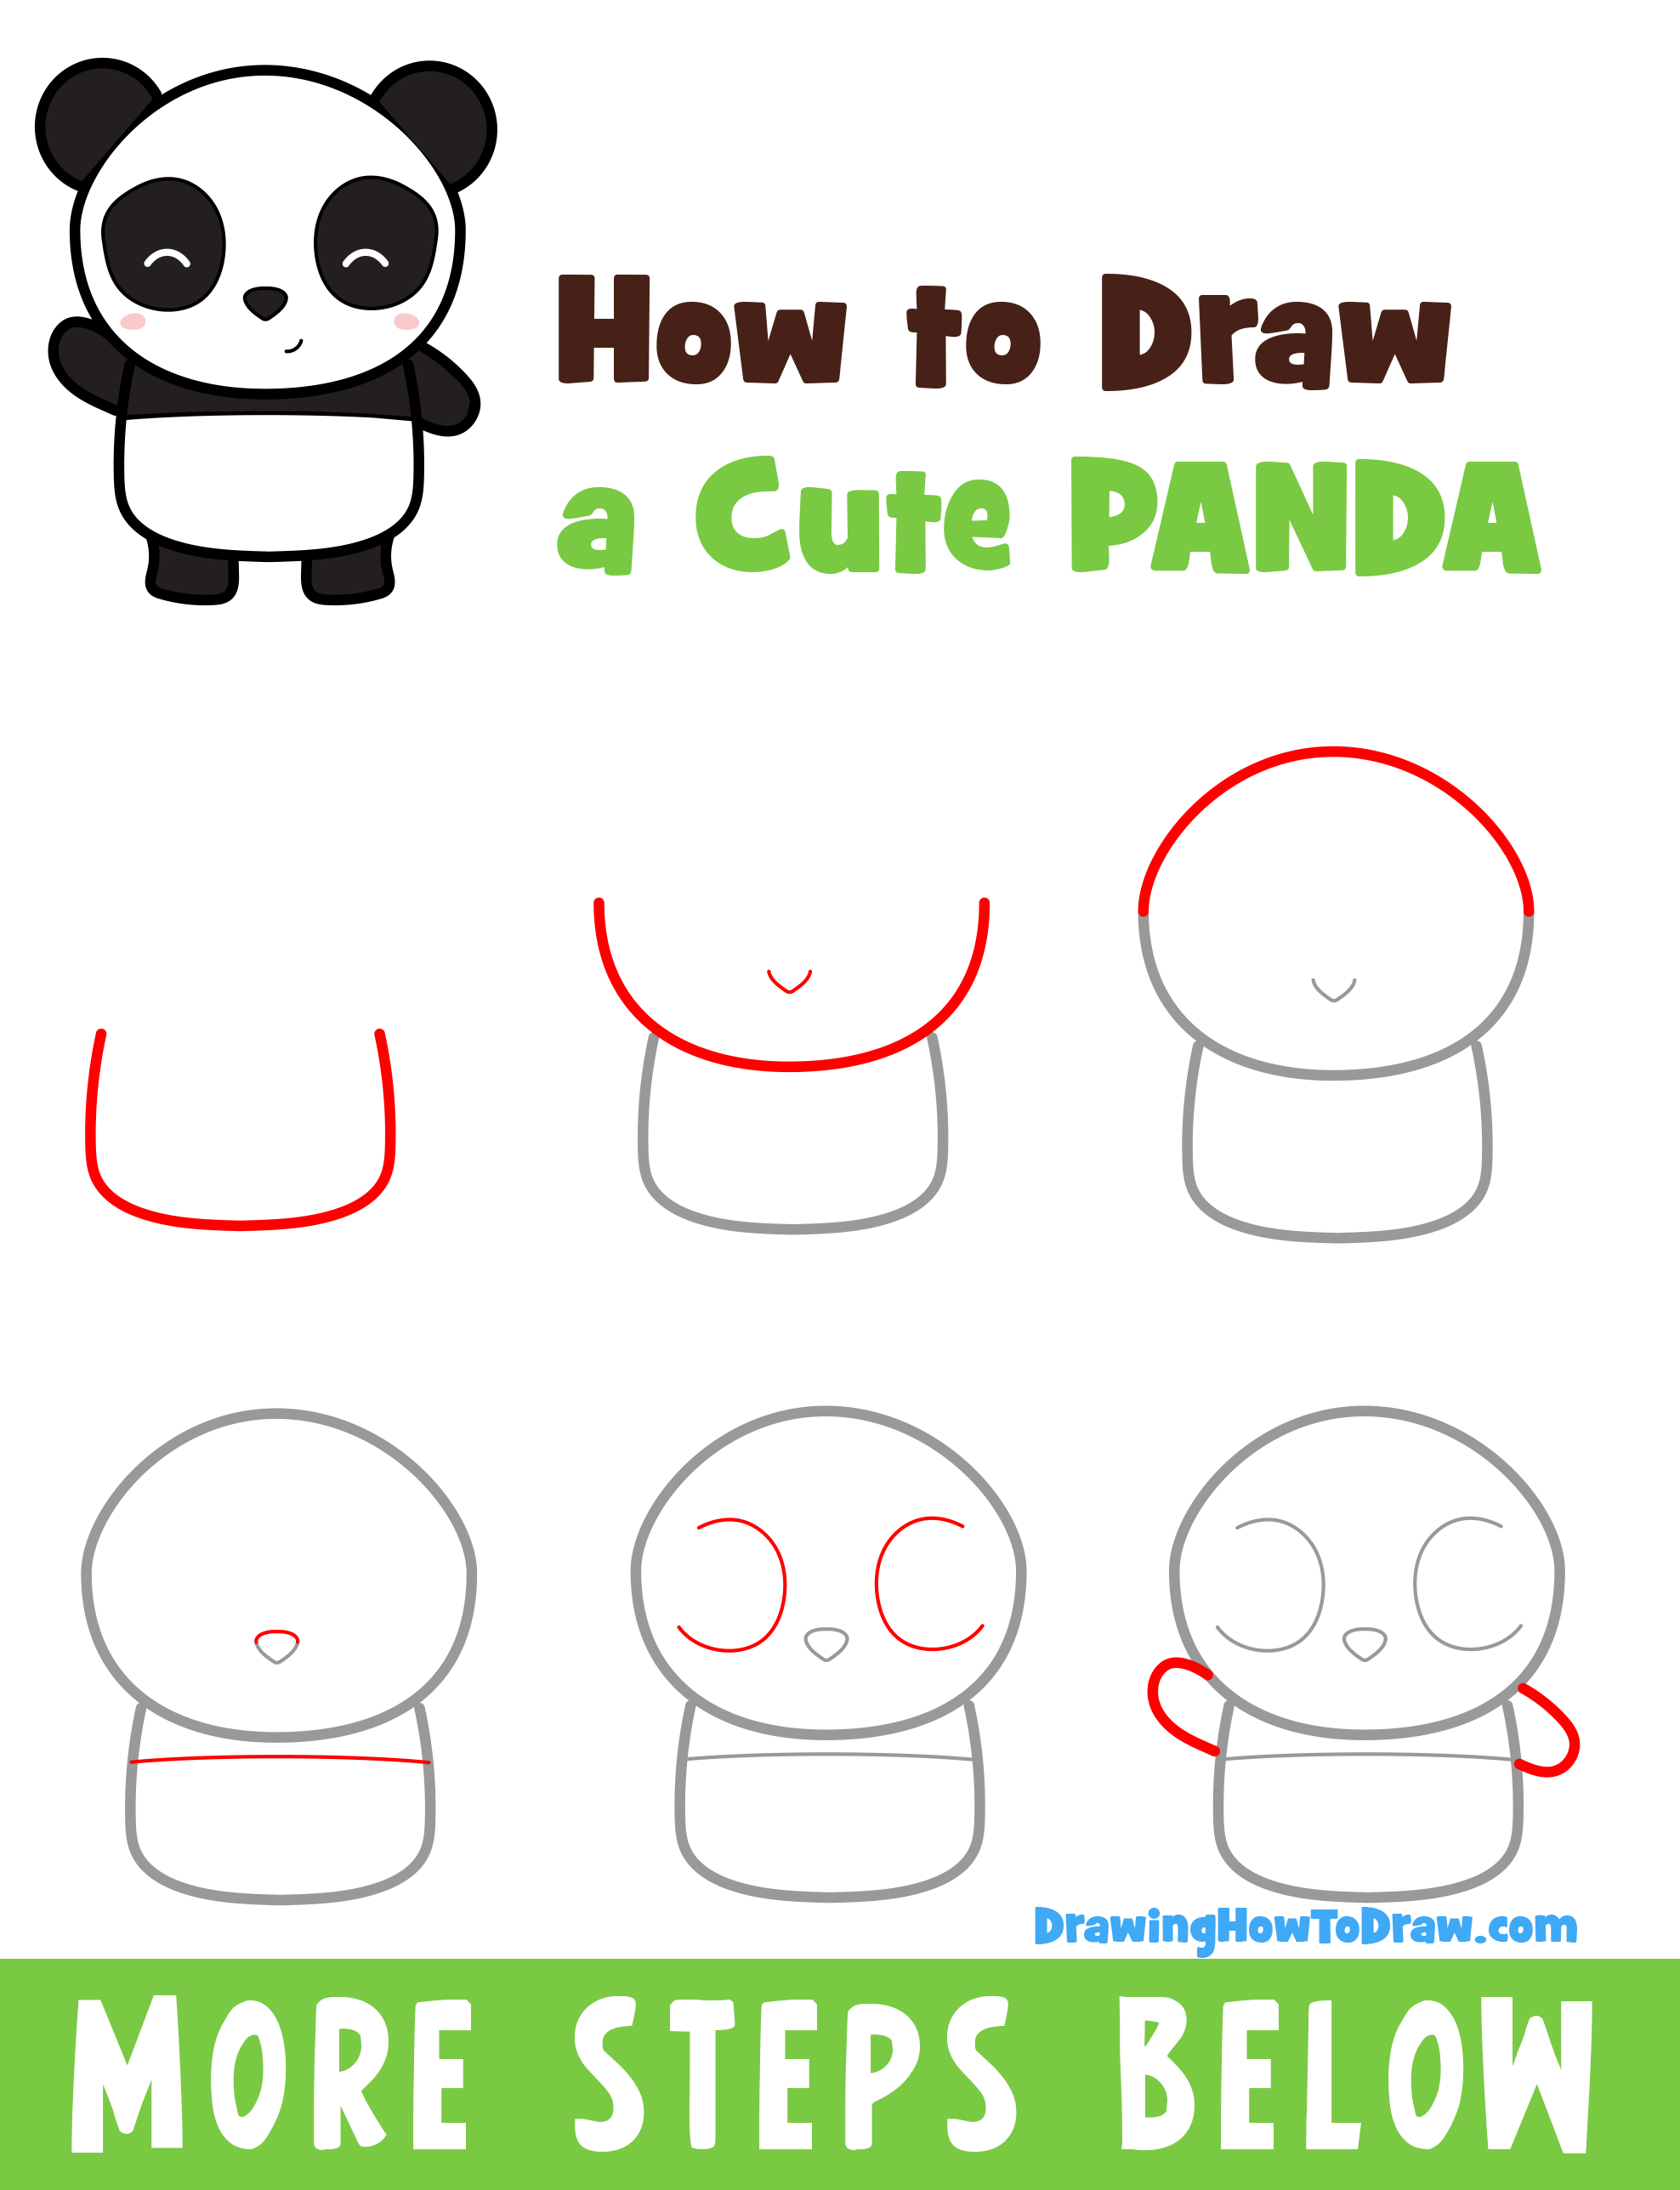 HOW TO DRAW A KAWAII PANDA, STEP BY STEP